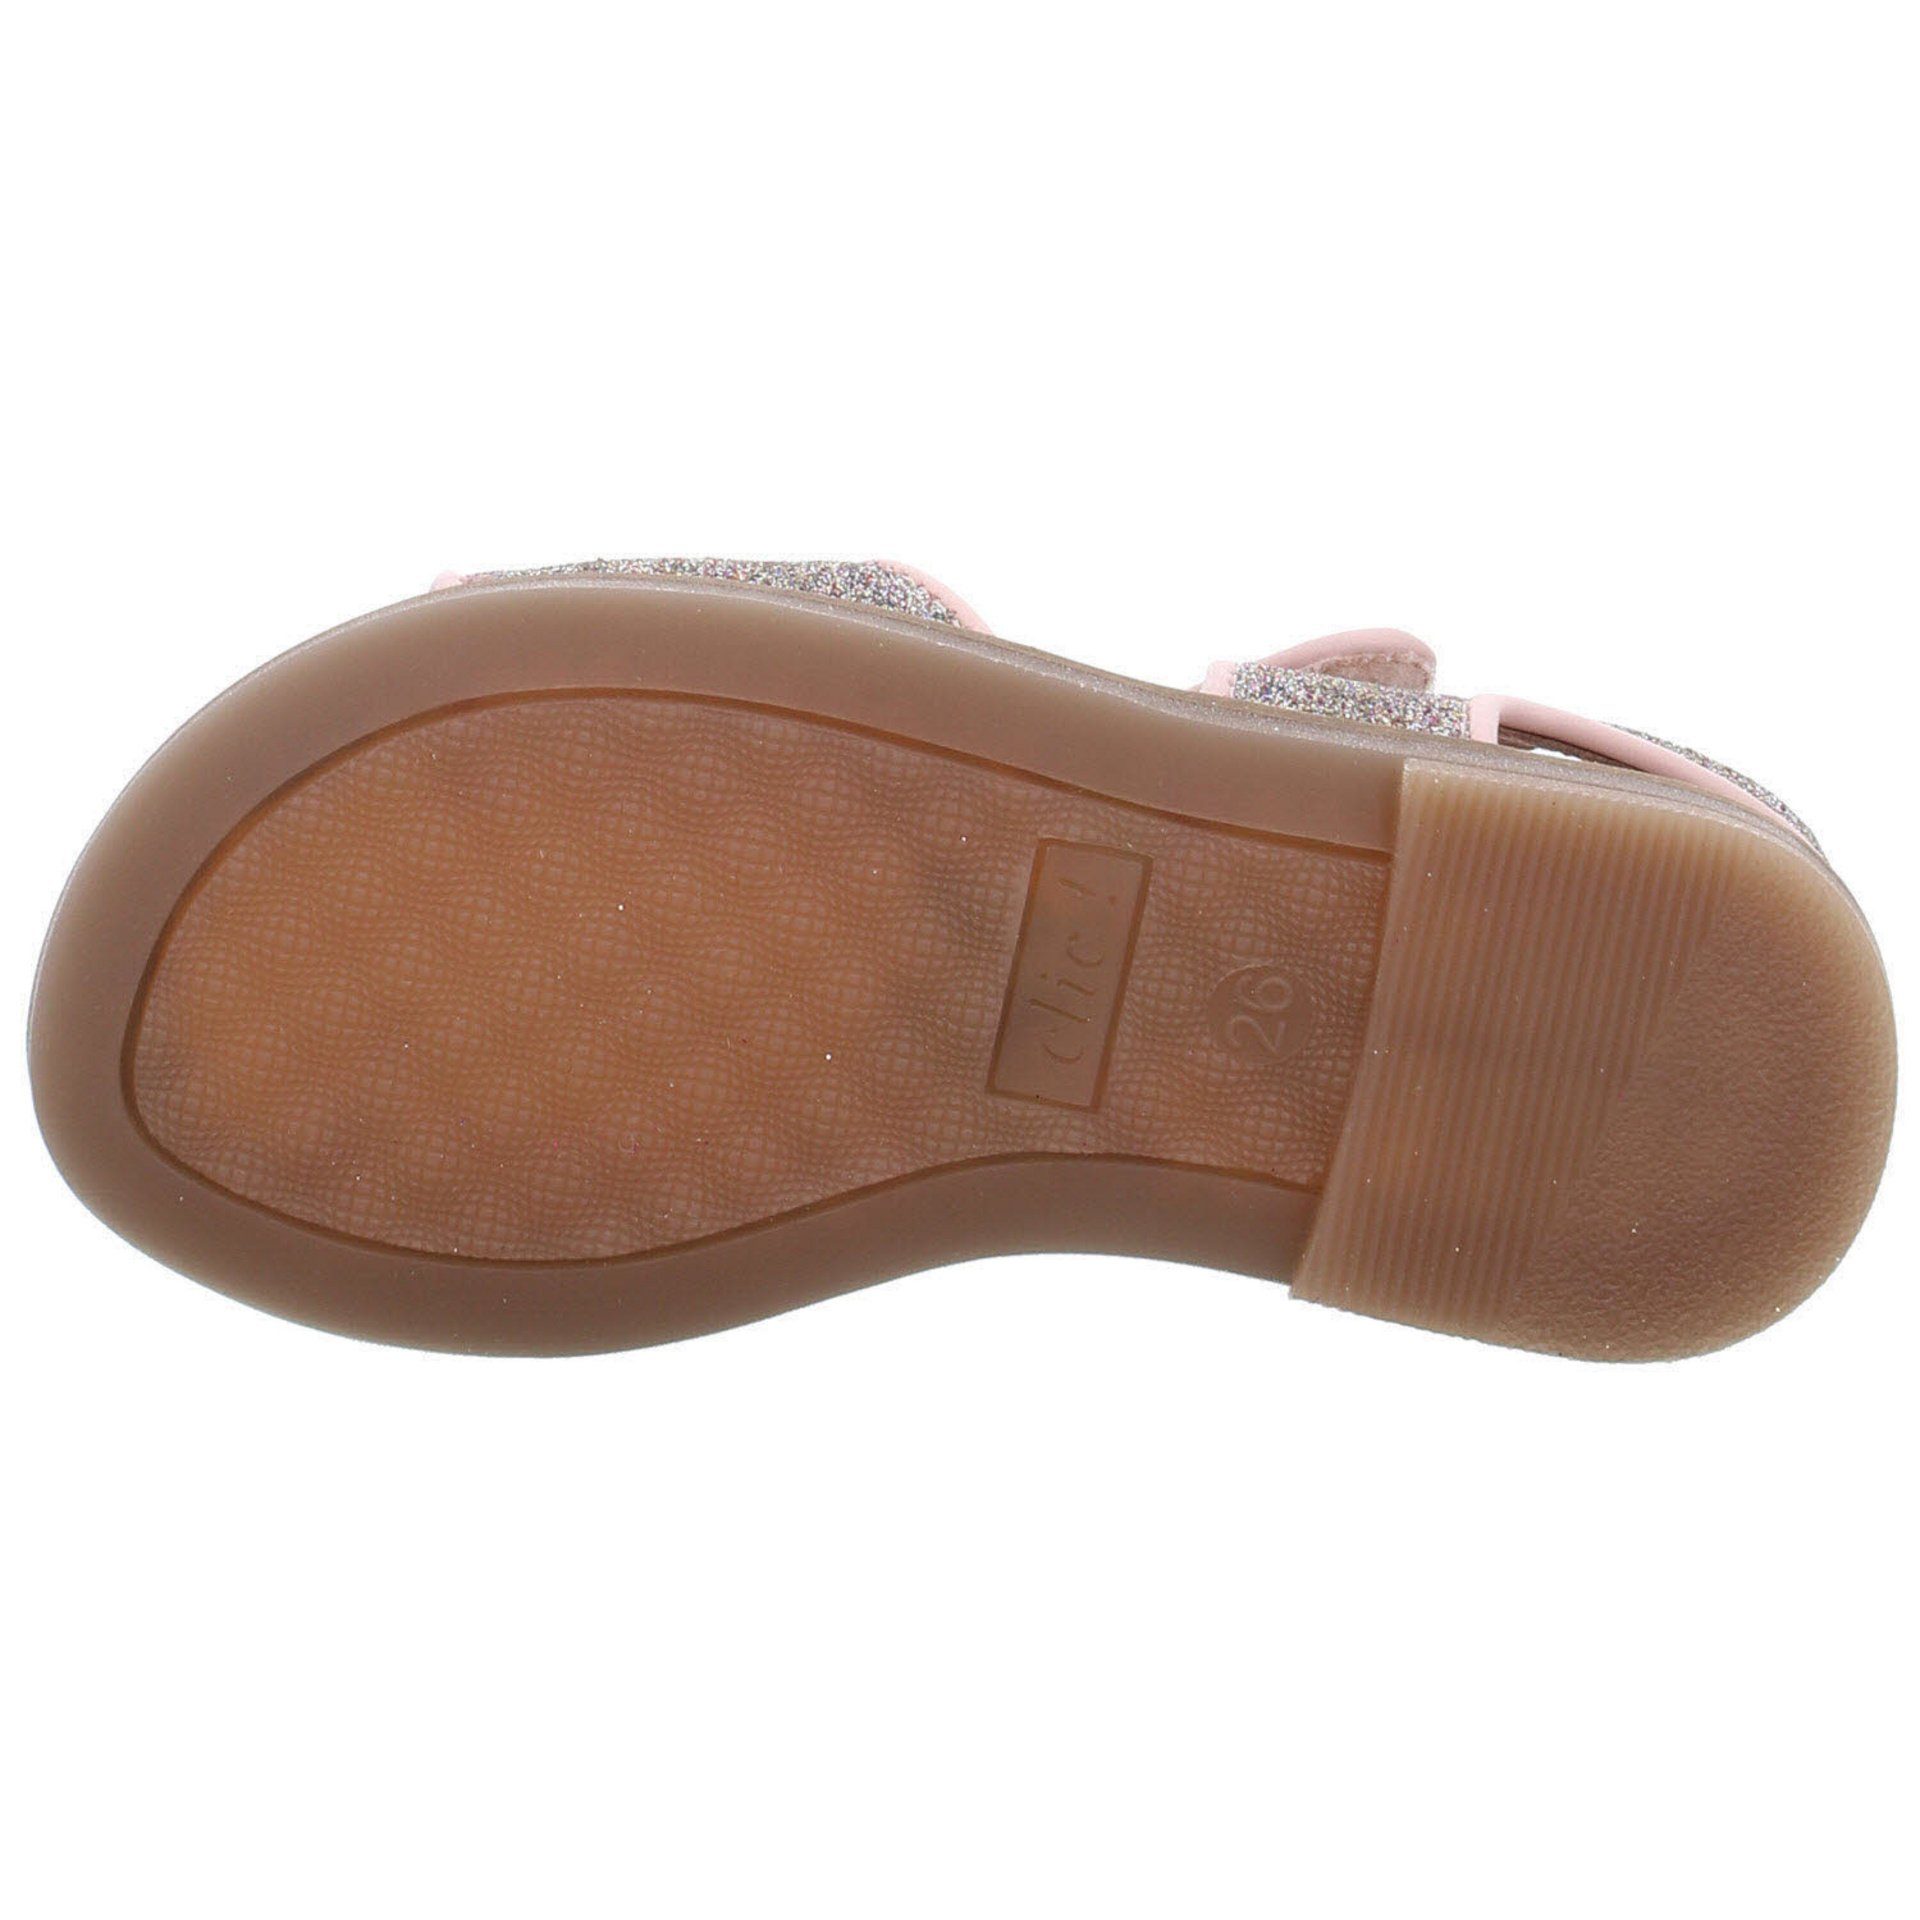 Clic Sandale Schuhe Sandale Kinderschuhe Lederkombination Mädchen Sandalen